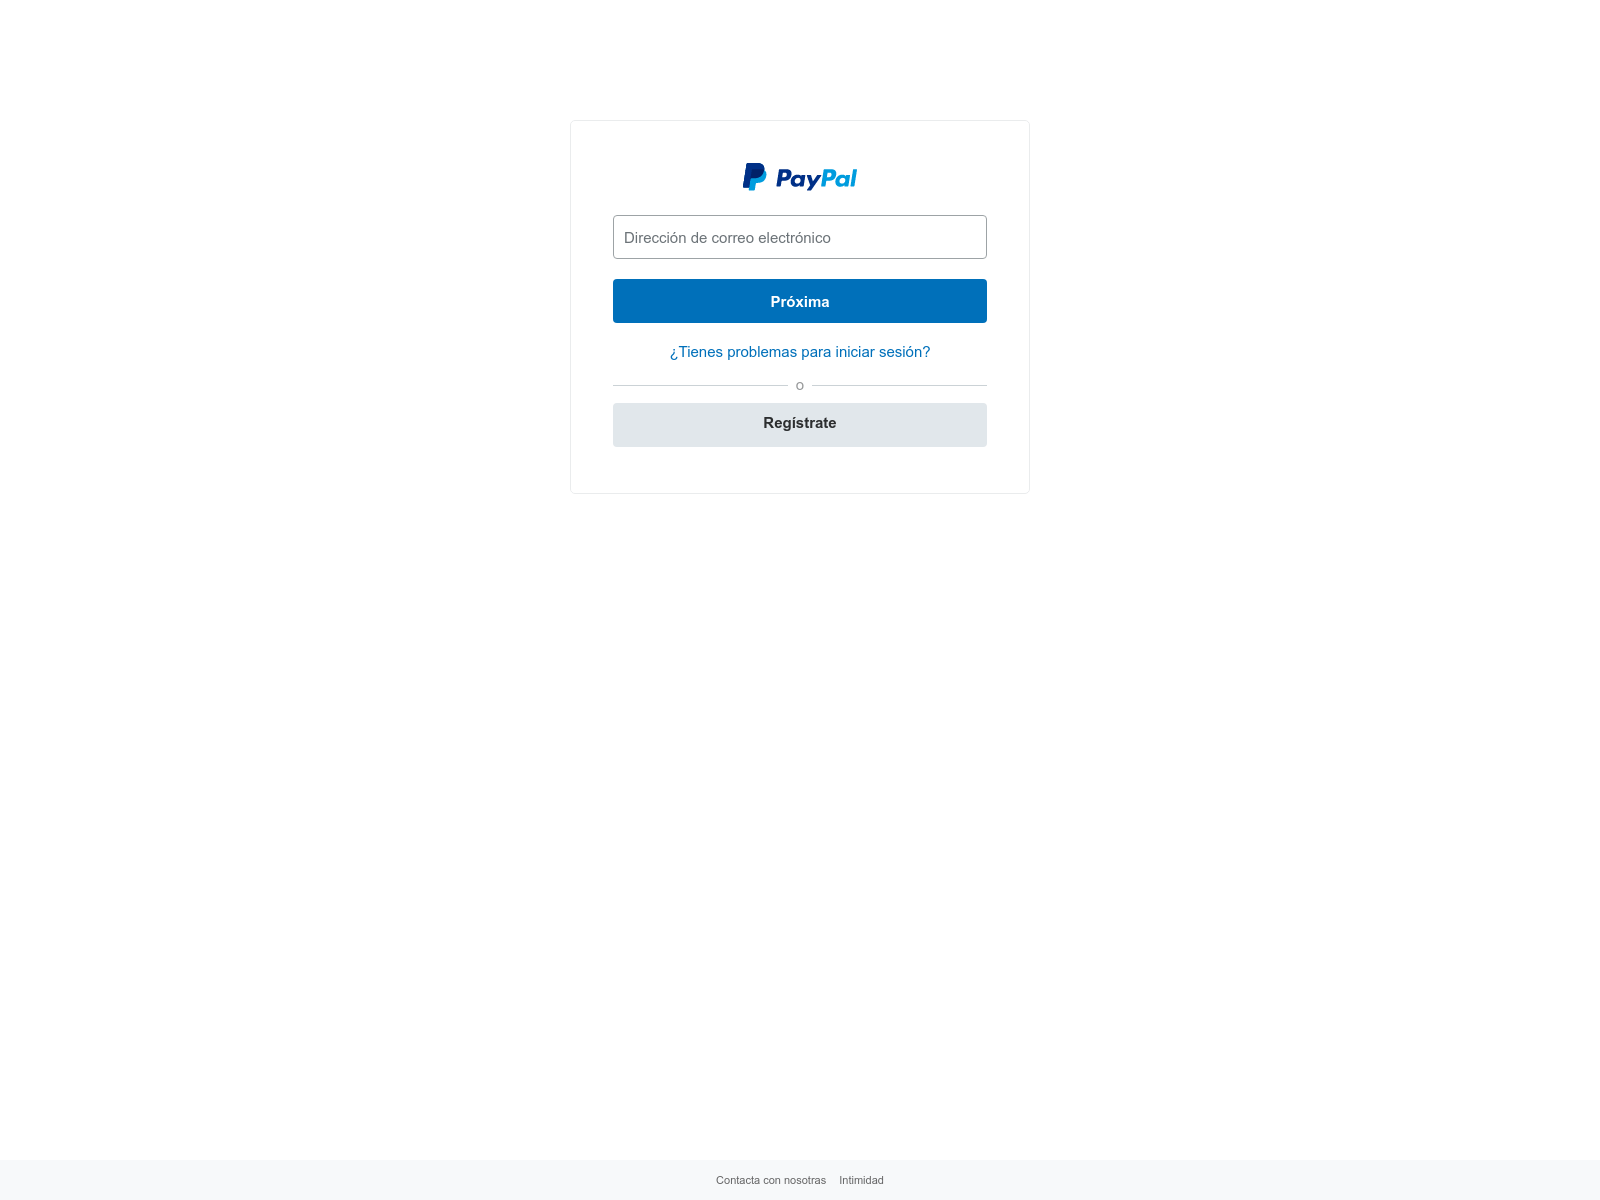 Paypal phishing website 2